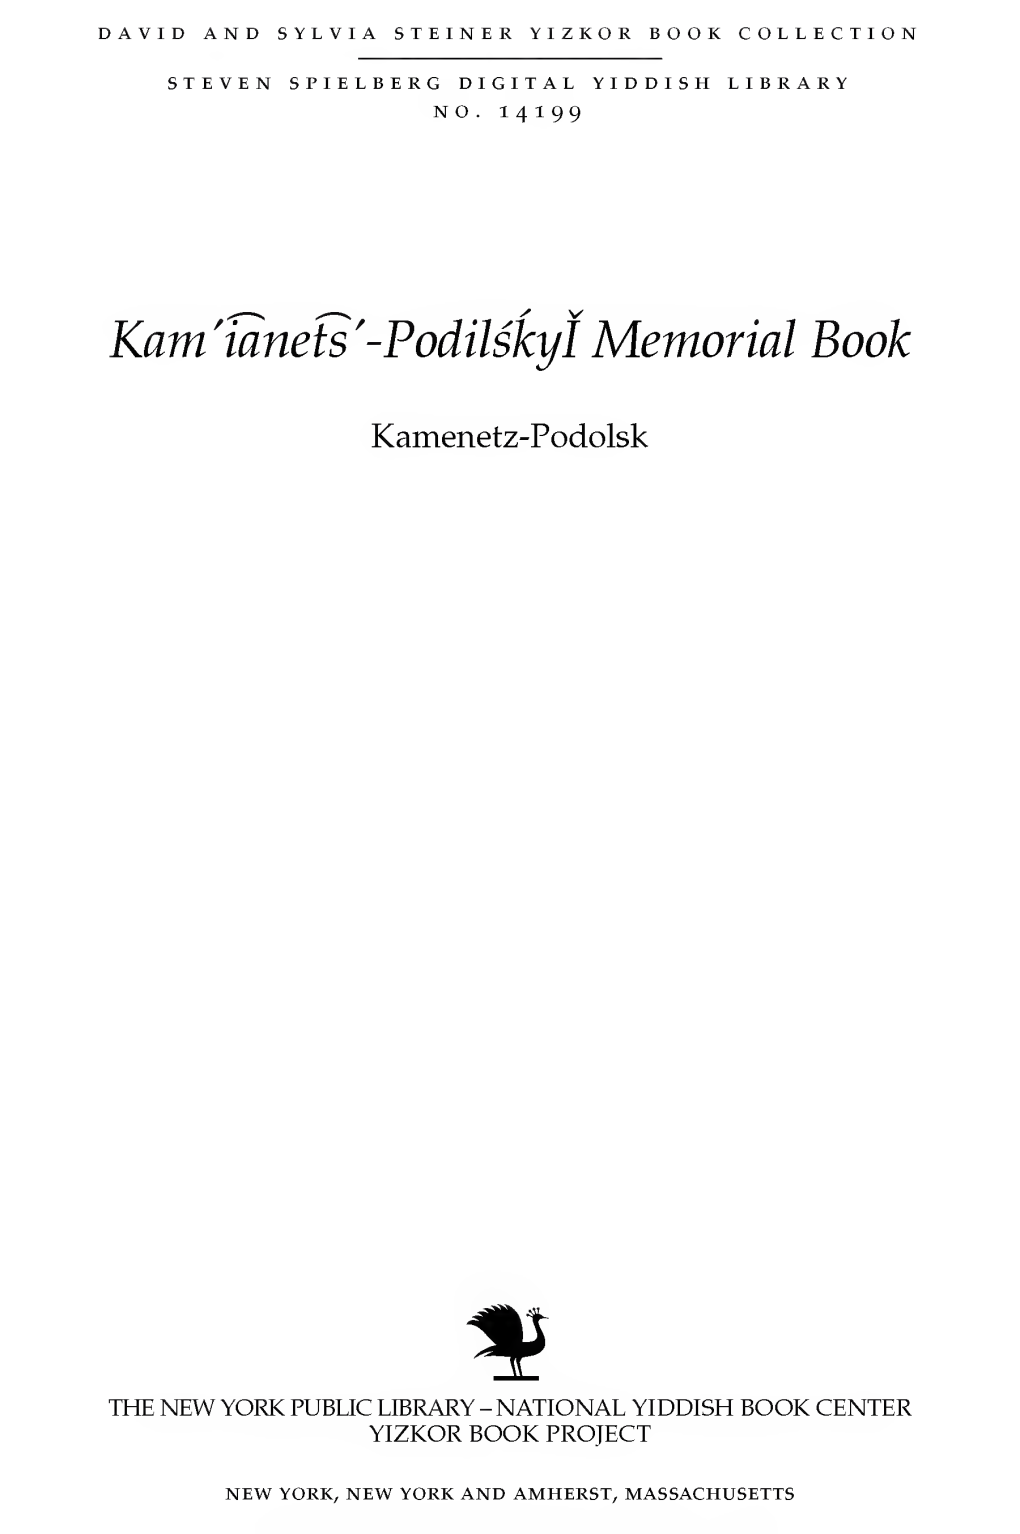 Kamenetz-Podolsk : a Memorial to a Jewish Community Annihilated by the Nazis in 1941 / Editor, Leon S